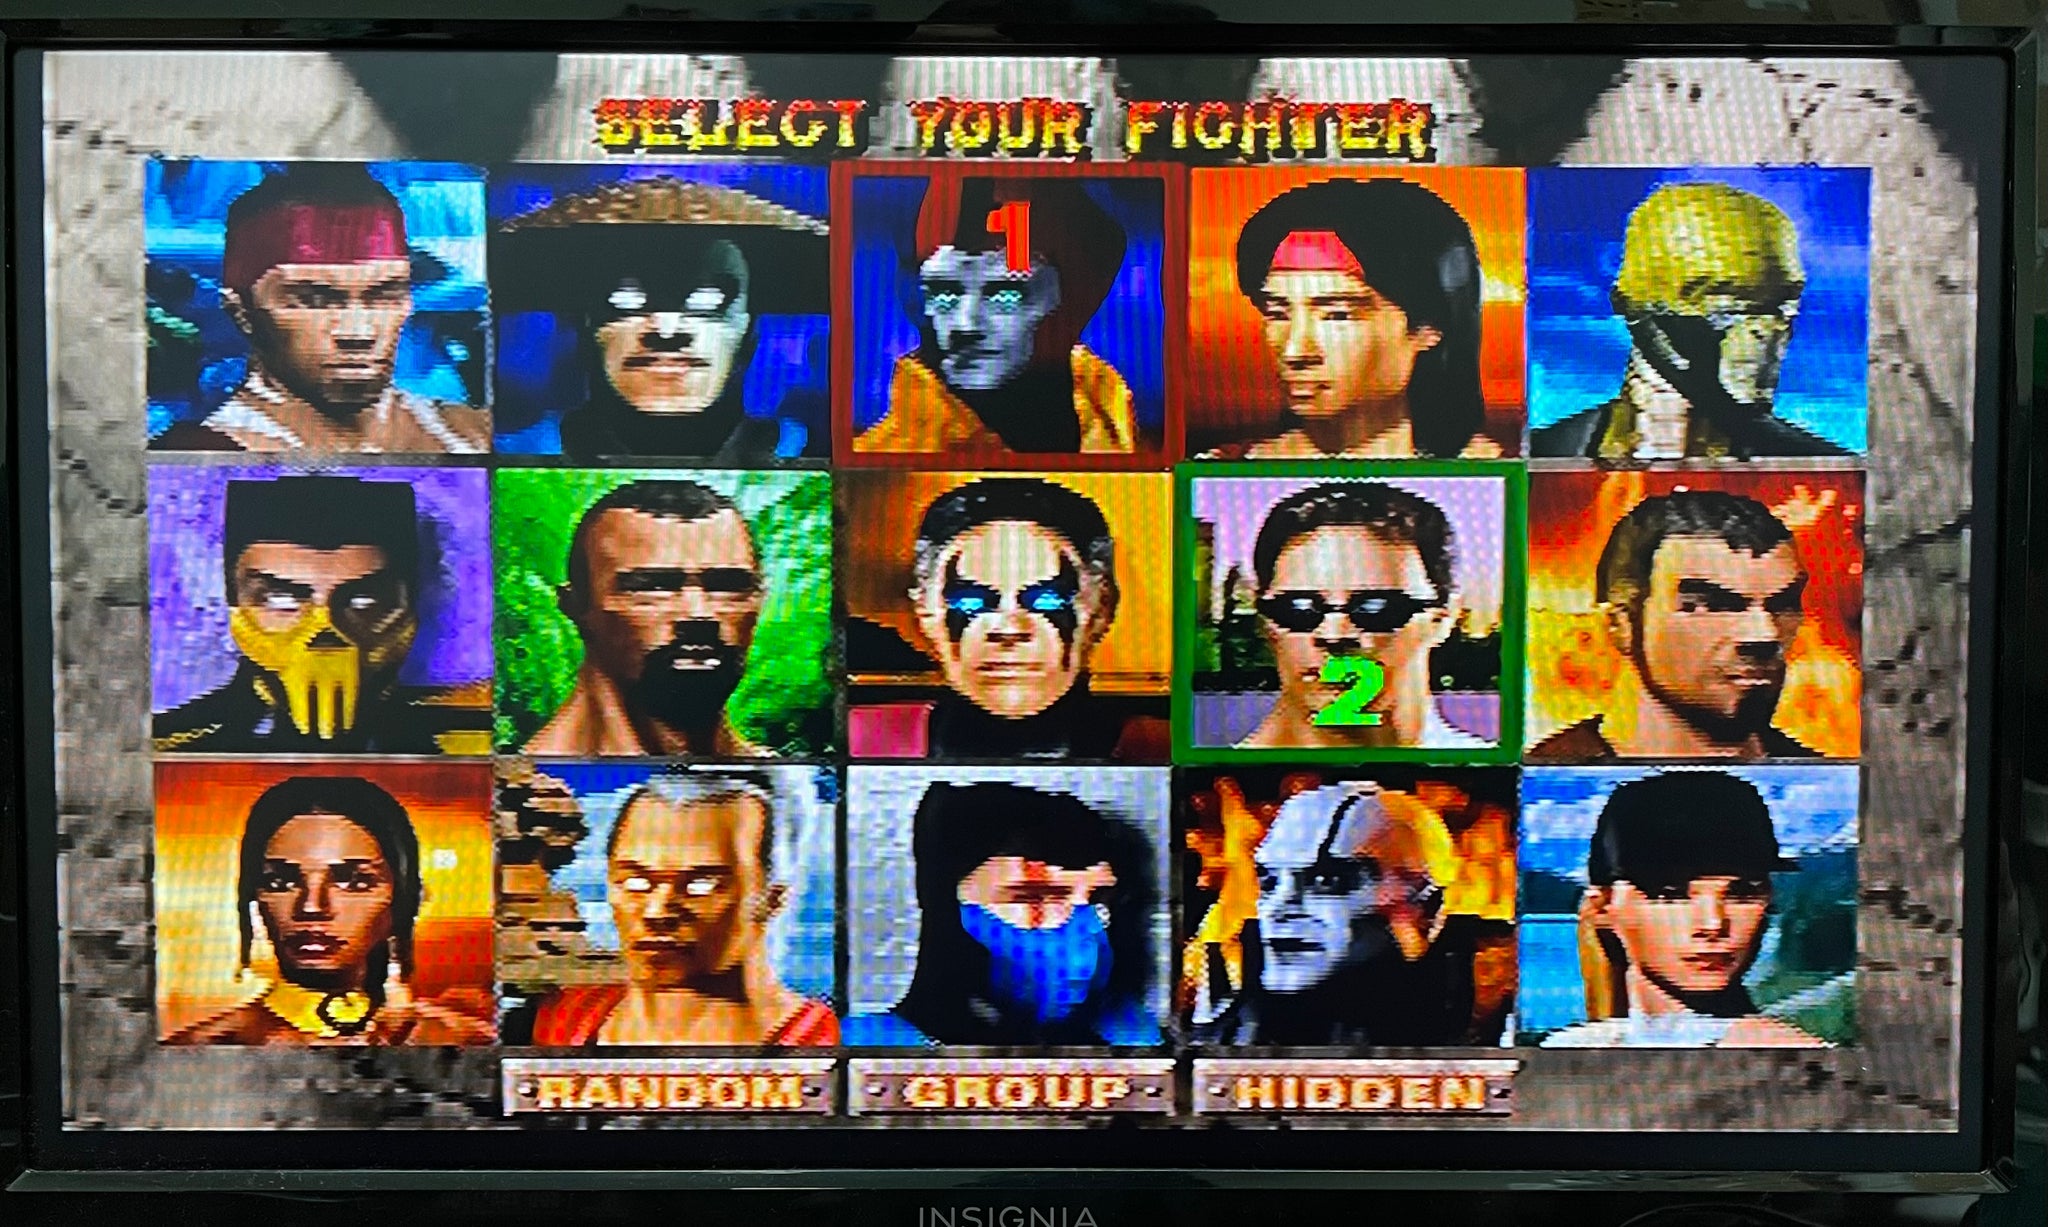 Mortal Kombat 4 (Nintendo 64) on Mupen64GC-FIX94 as a Wii VC Channel